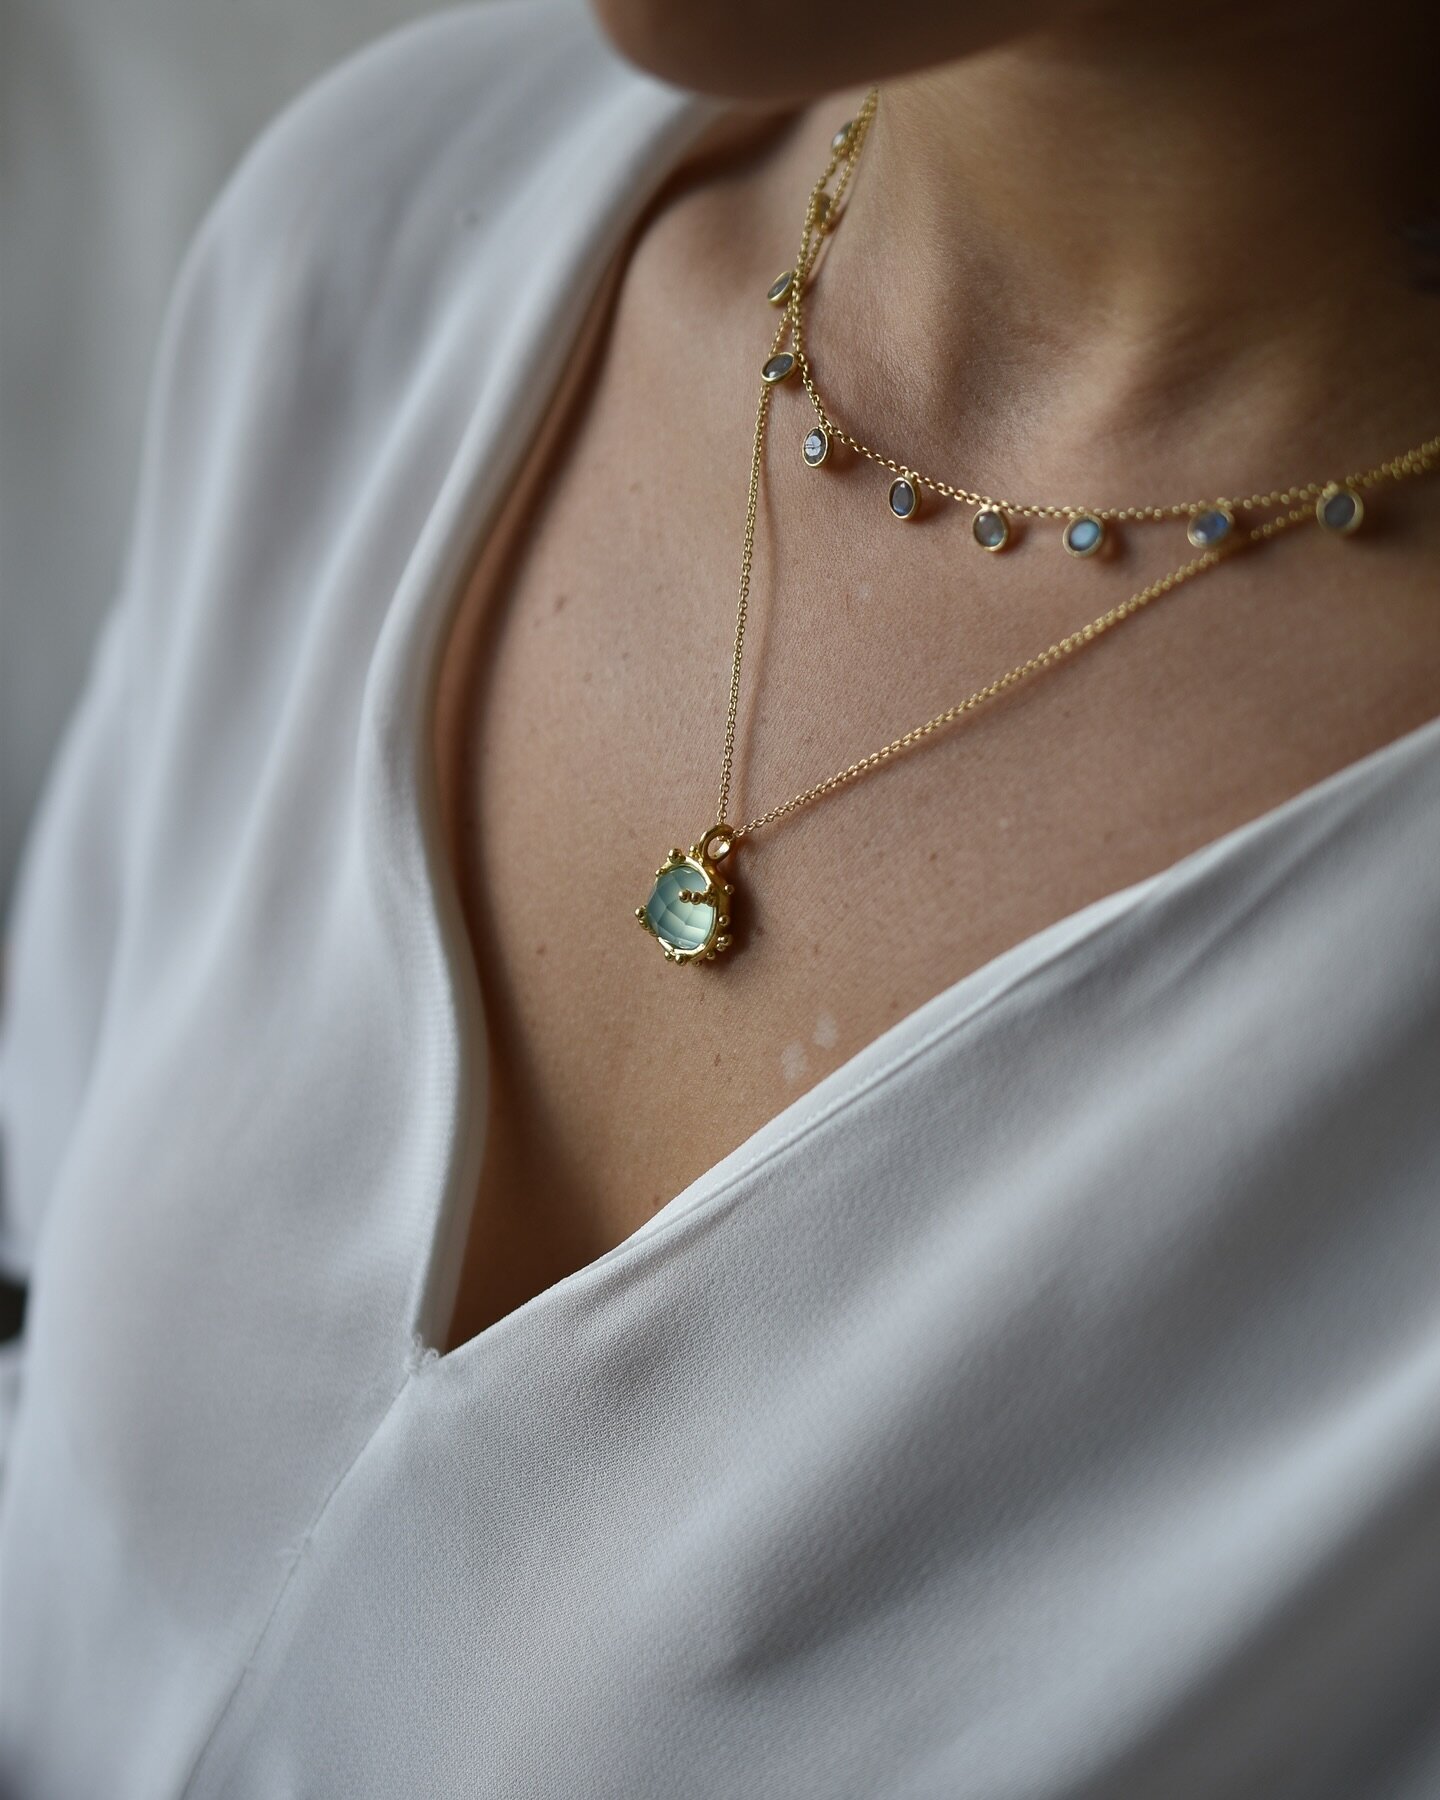 BACK IN STOCK🎉🎉🎉
Our bestselling Labradorite choker and the beautiful aqua chalcedony pendant.
.
.
.
.
#militzaortiz #choker #chokers #chokernecklace #chokerstyle #labradorite #labradoritejewelry #goldpendant #pendant #pendantnecklace #jewellery #